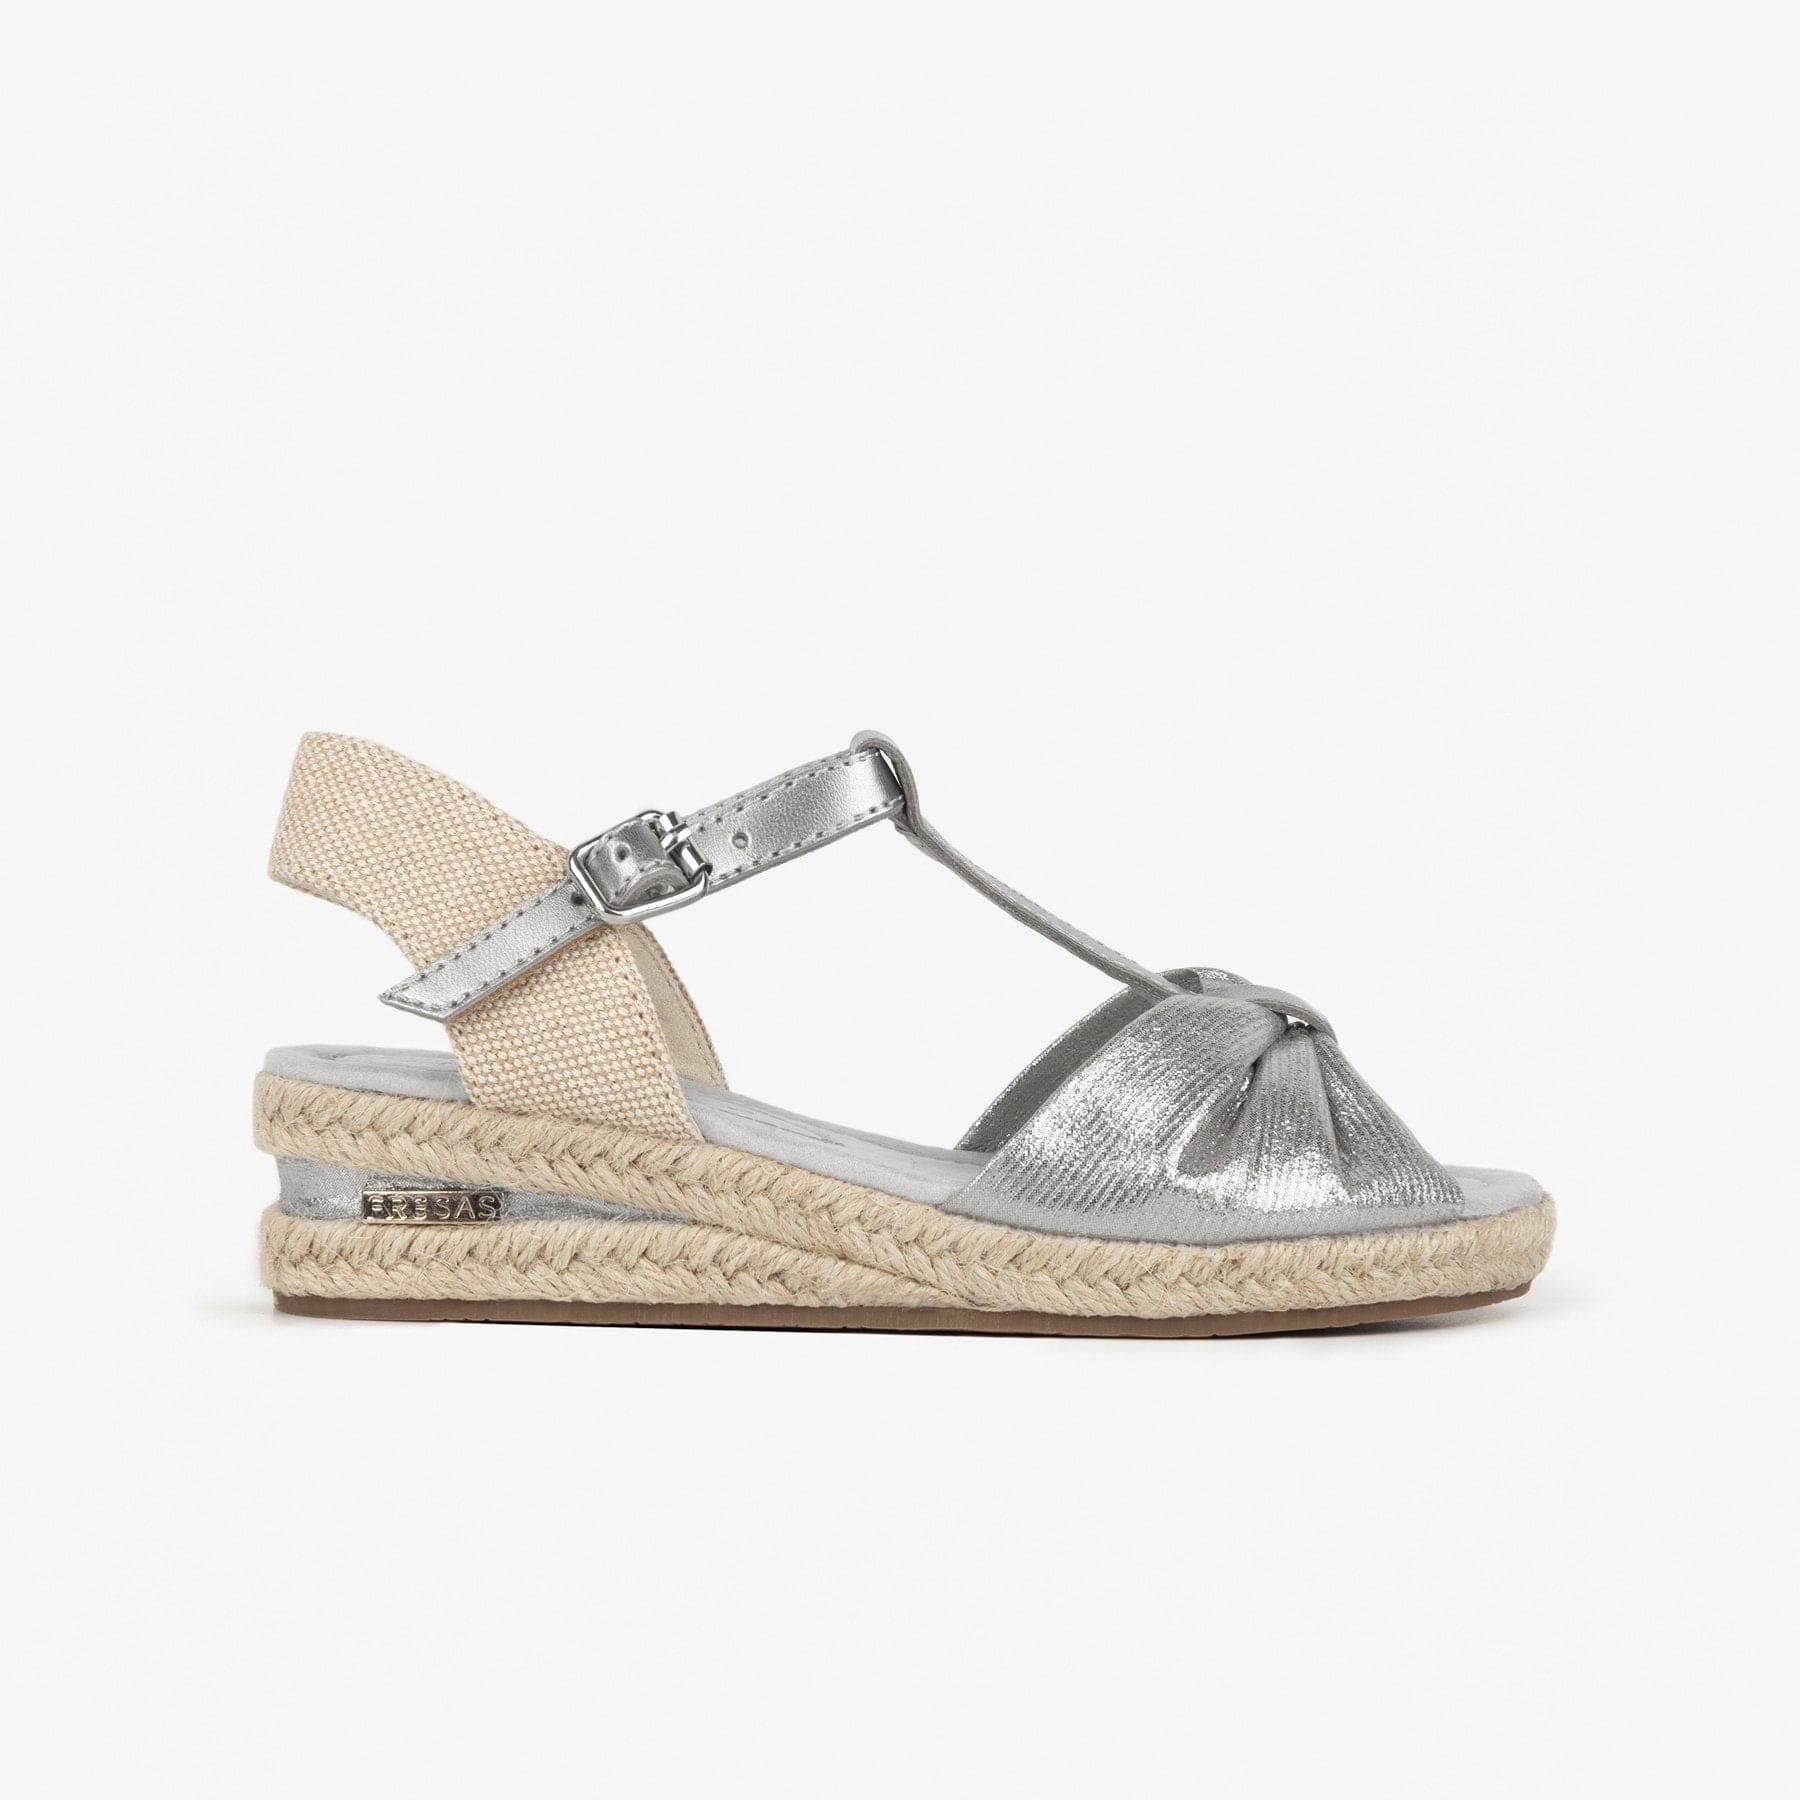 FRESAS CON NATA Shoes Girl's Silver Wedge Canvas Sandals